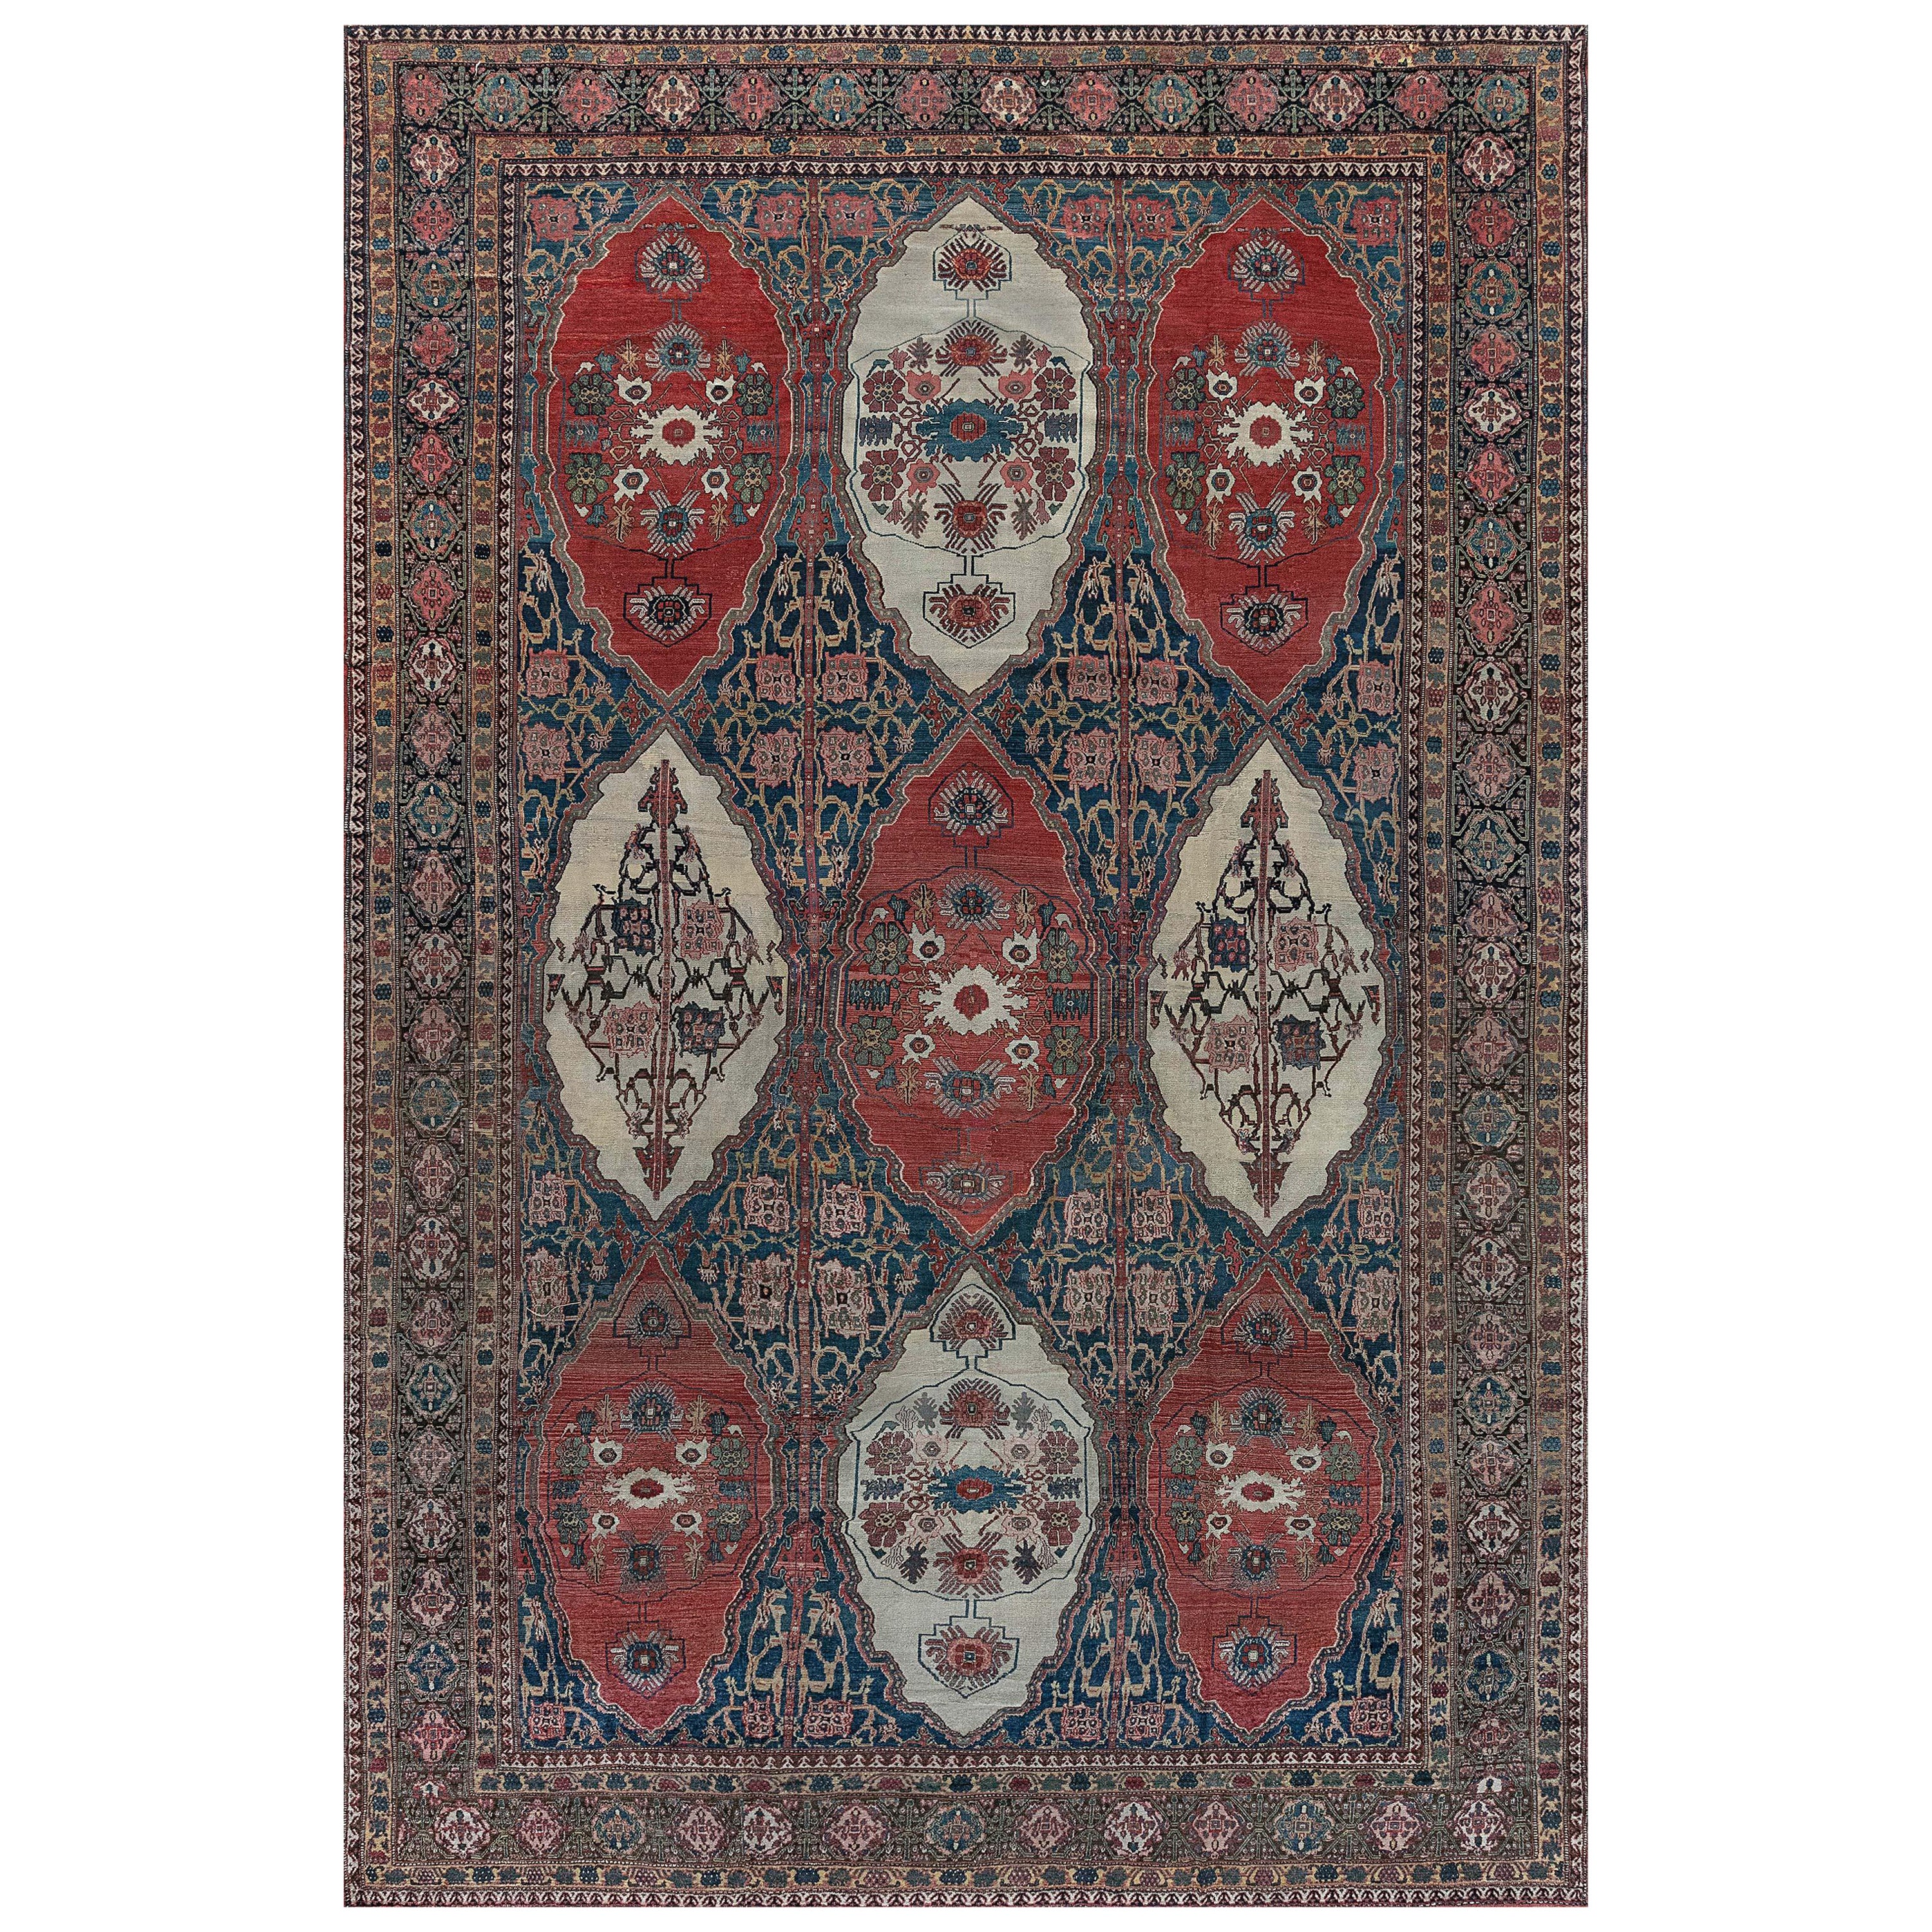 Authentic 19th Century Persian Senneh Handmade Rug